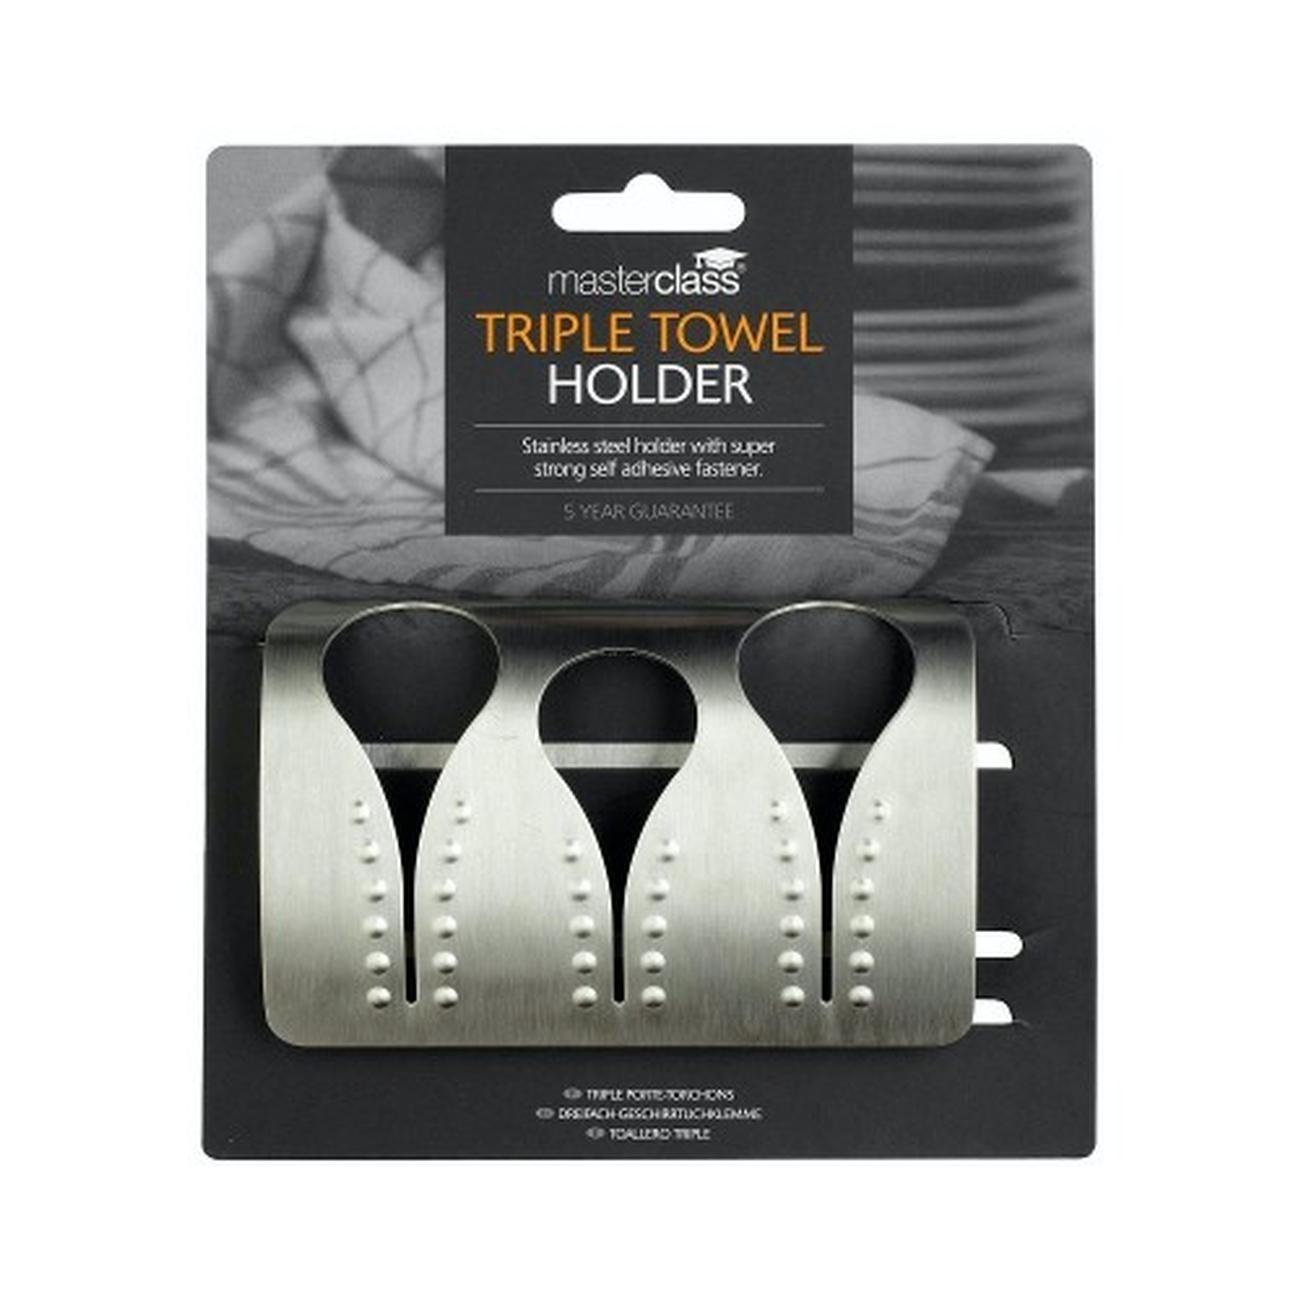 masterclass-triple-towel-holder-stainless-steel - MasterClass Triple Towel Holder Stainless Steel